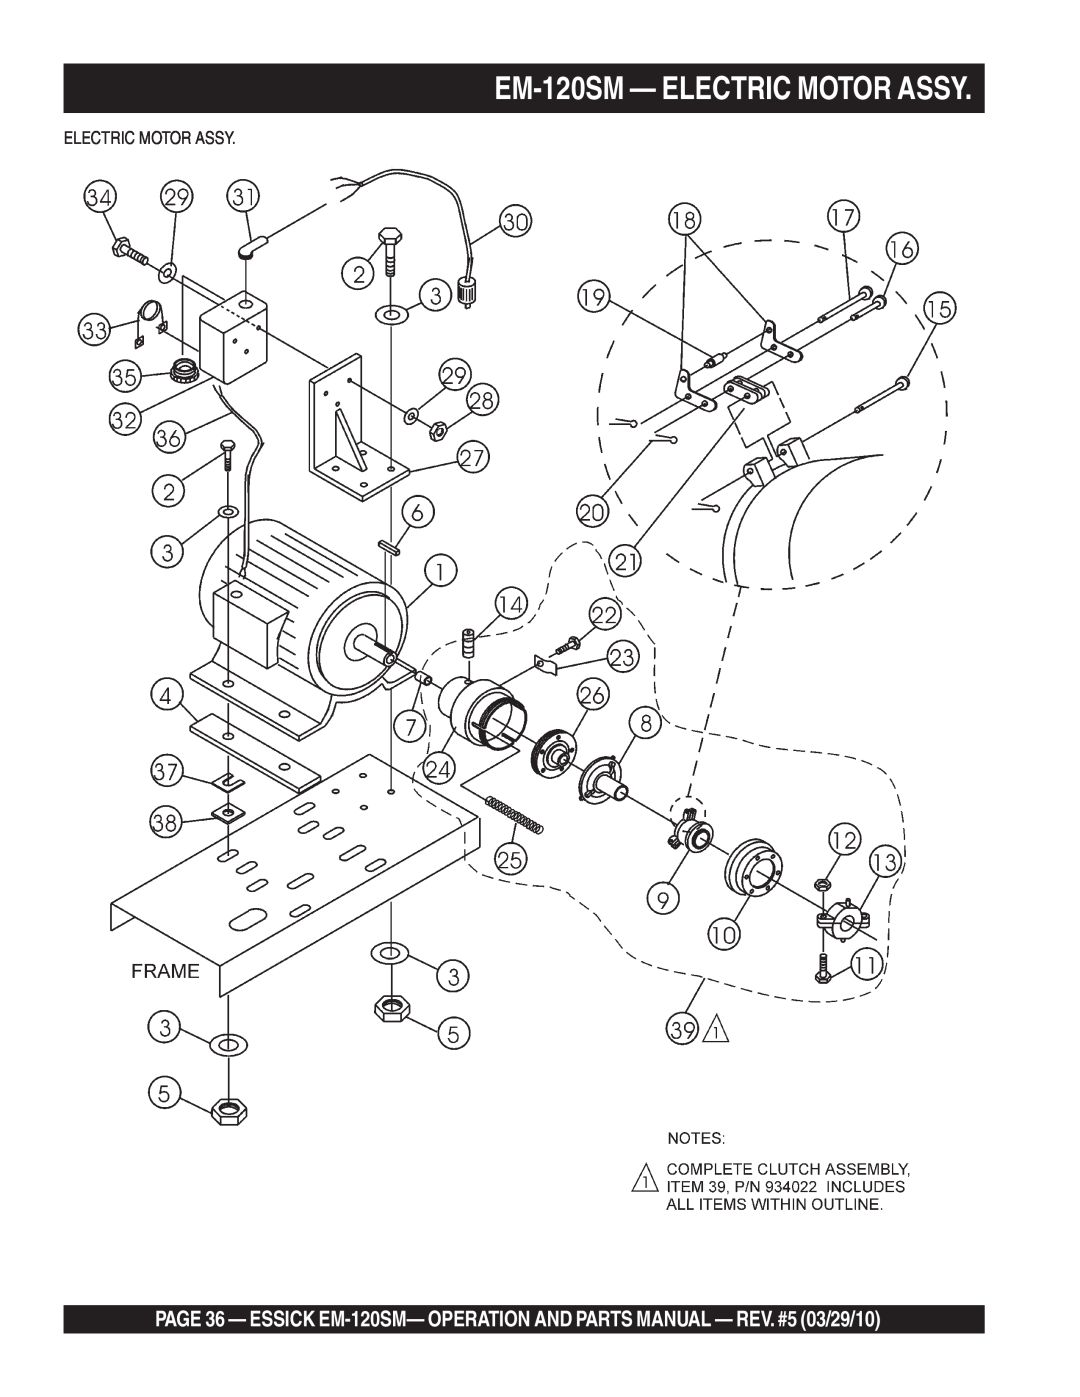 Multiquip manual EM-120SM- ELECTRIC MOTOR ASSY, Electric Motor Assy 